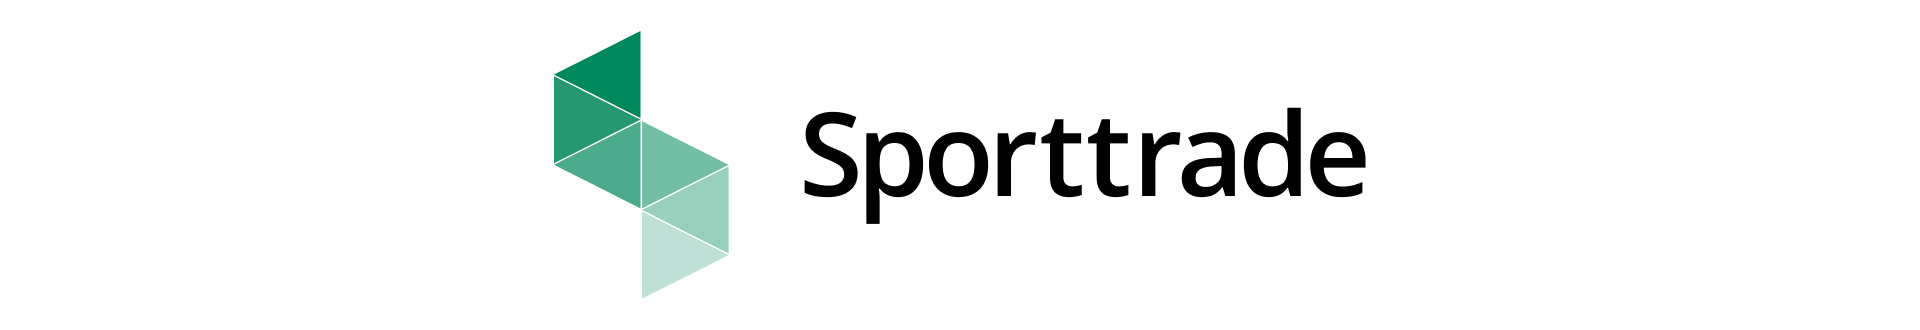 Sporttrade Company Logo